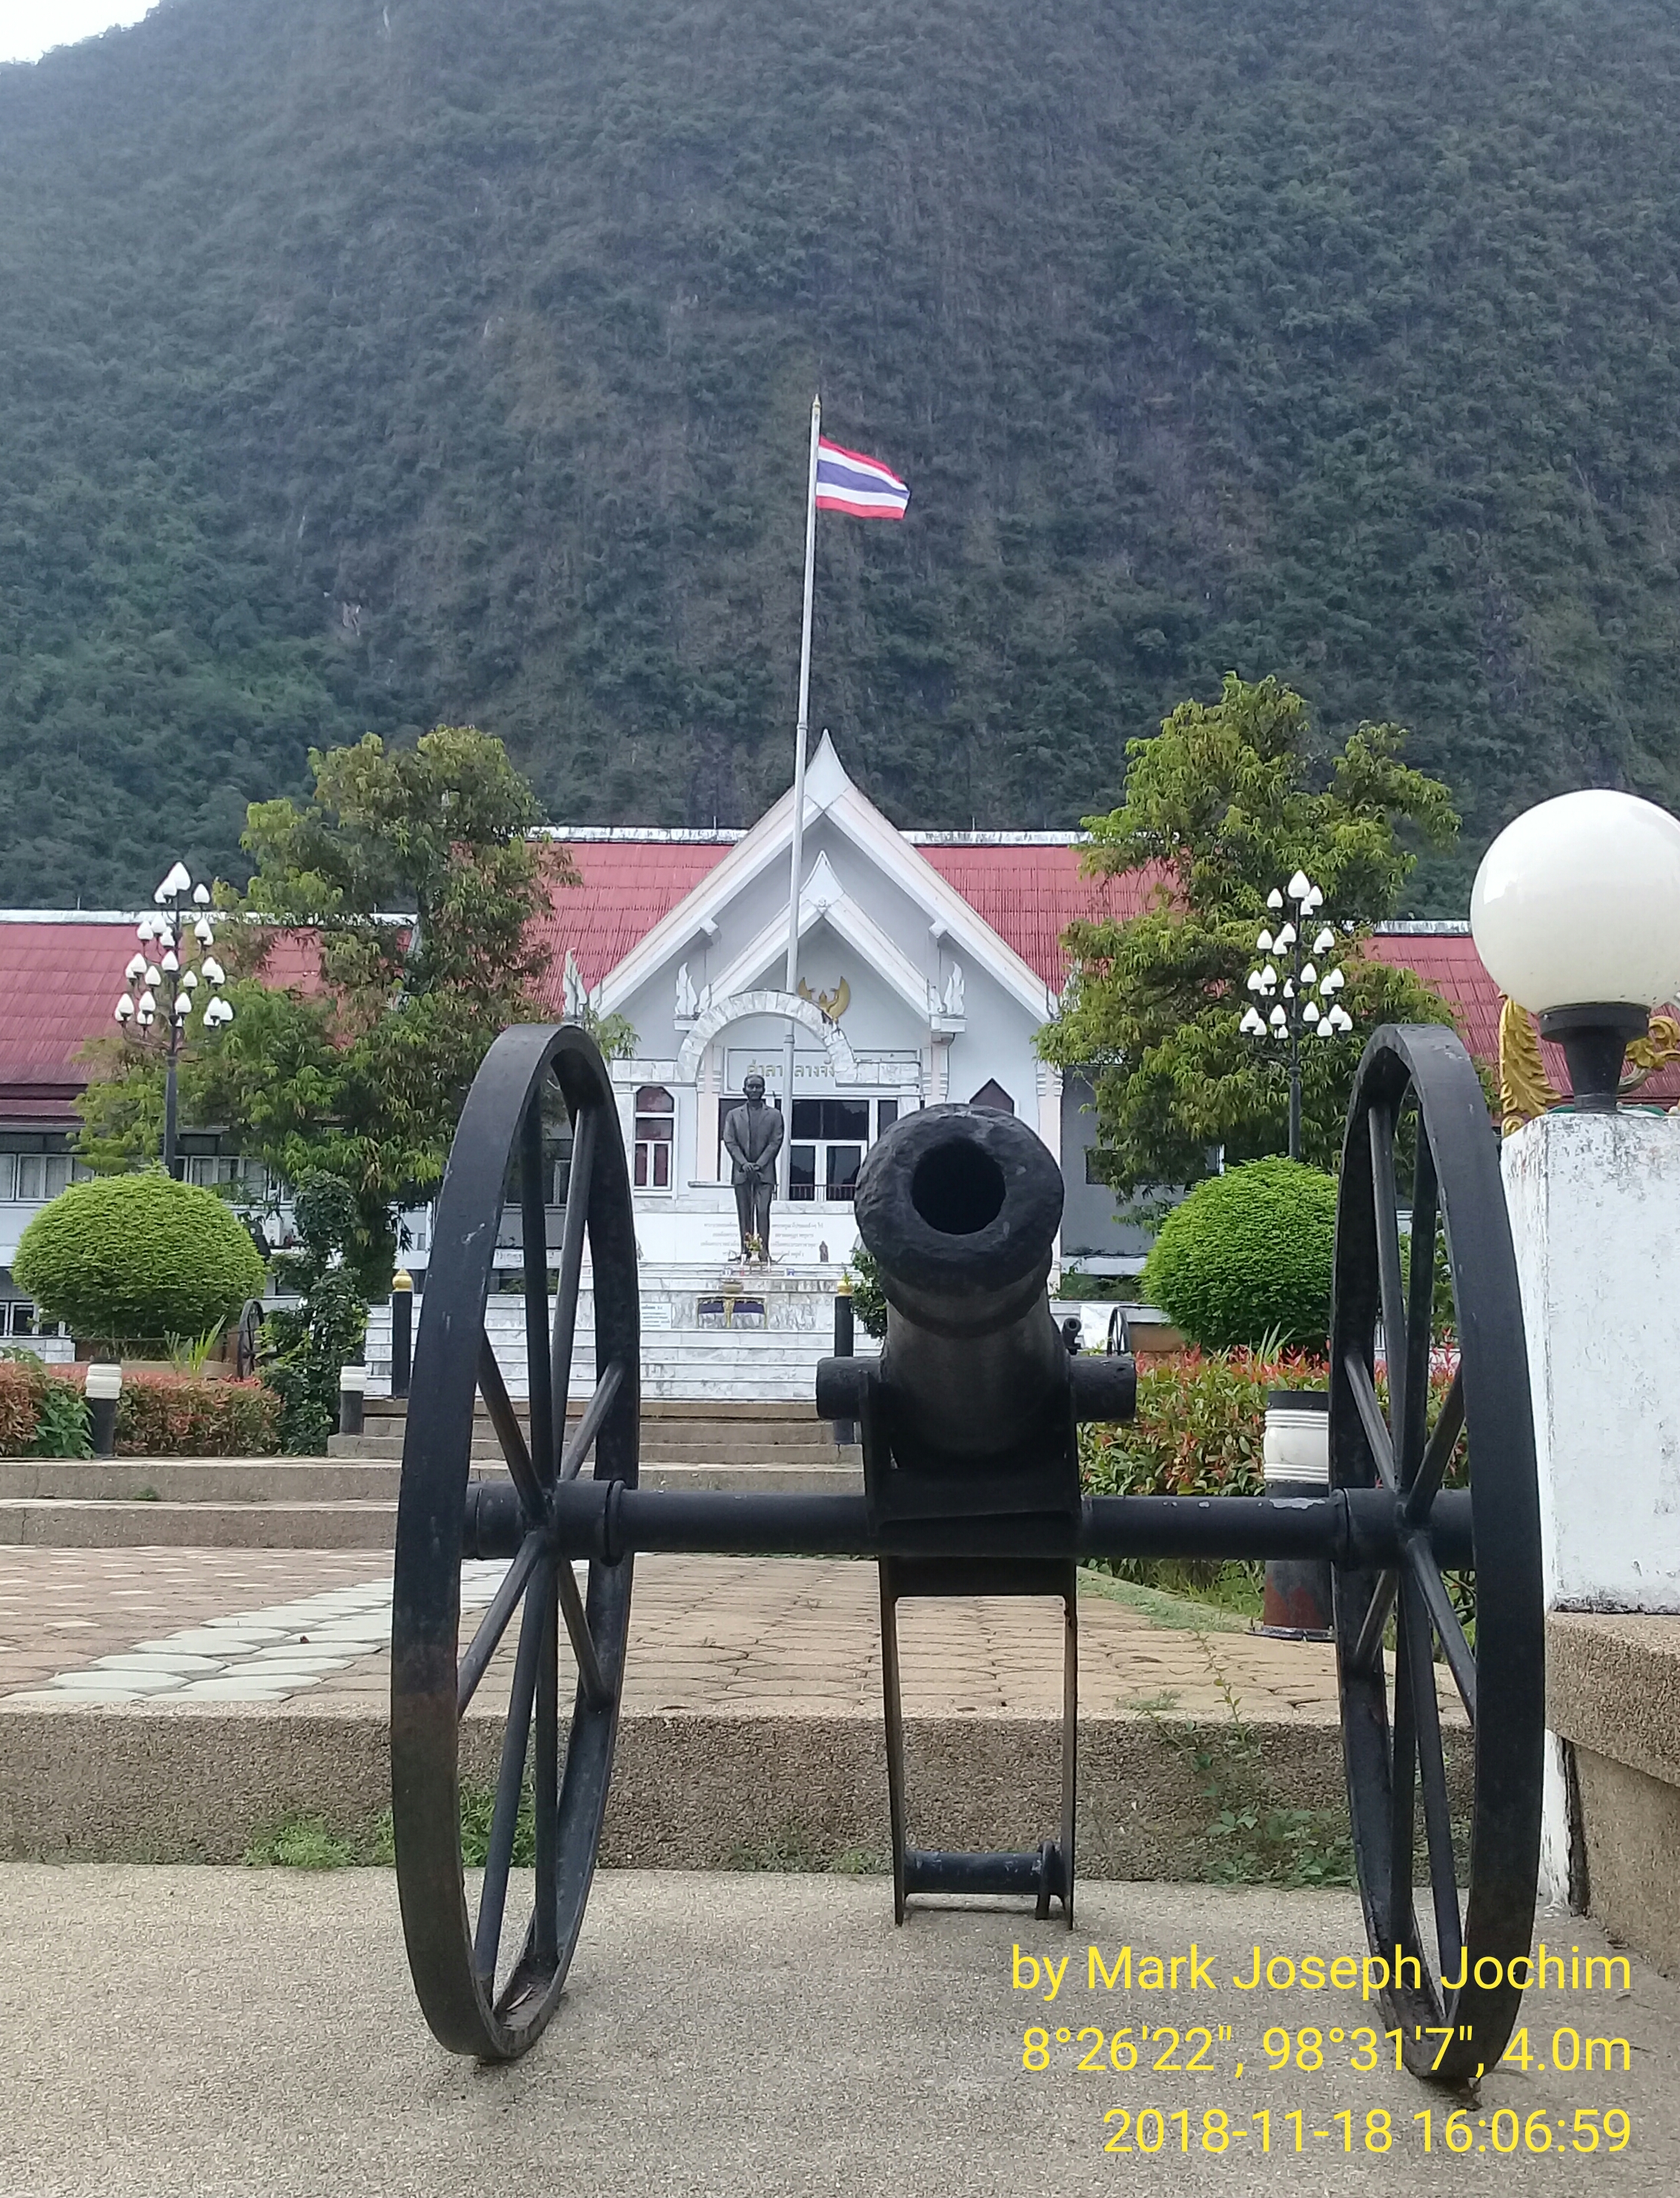 Cannon outside of Phang Nga Provincial Hall in Phang Nga Town, Thailand. Photo taken by Mark Joseph Jochim on November 18, 2018.